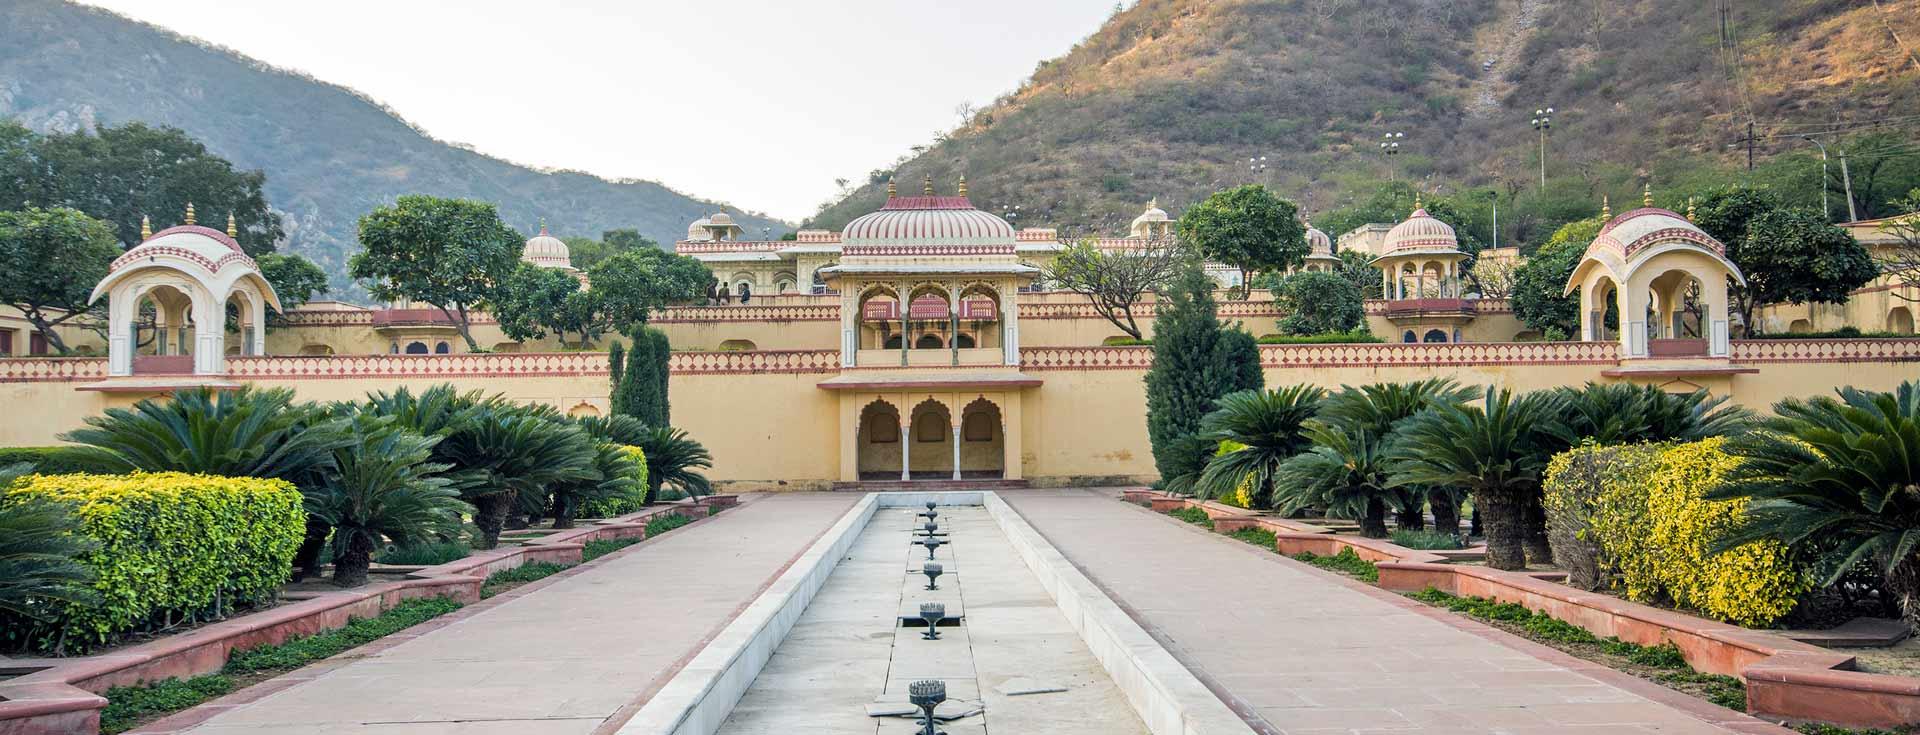 Sisodia Rani Palace and Garden in Jaipur